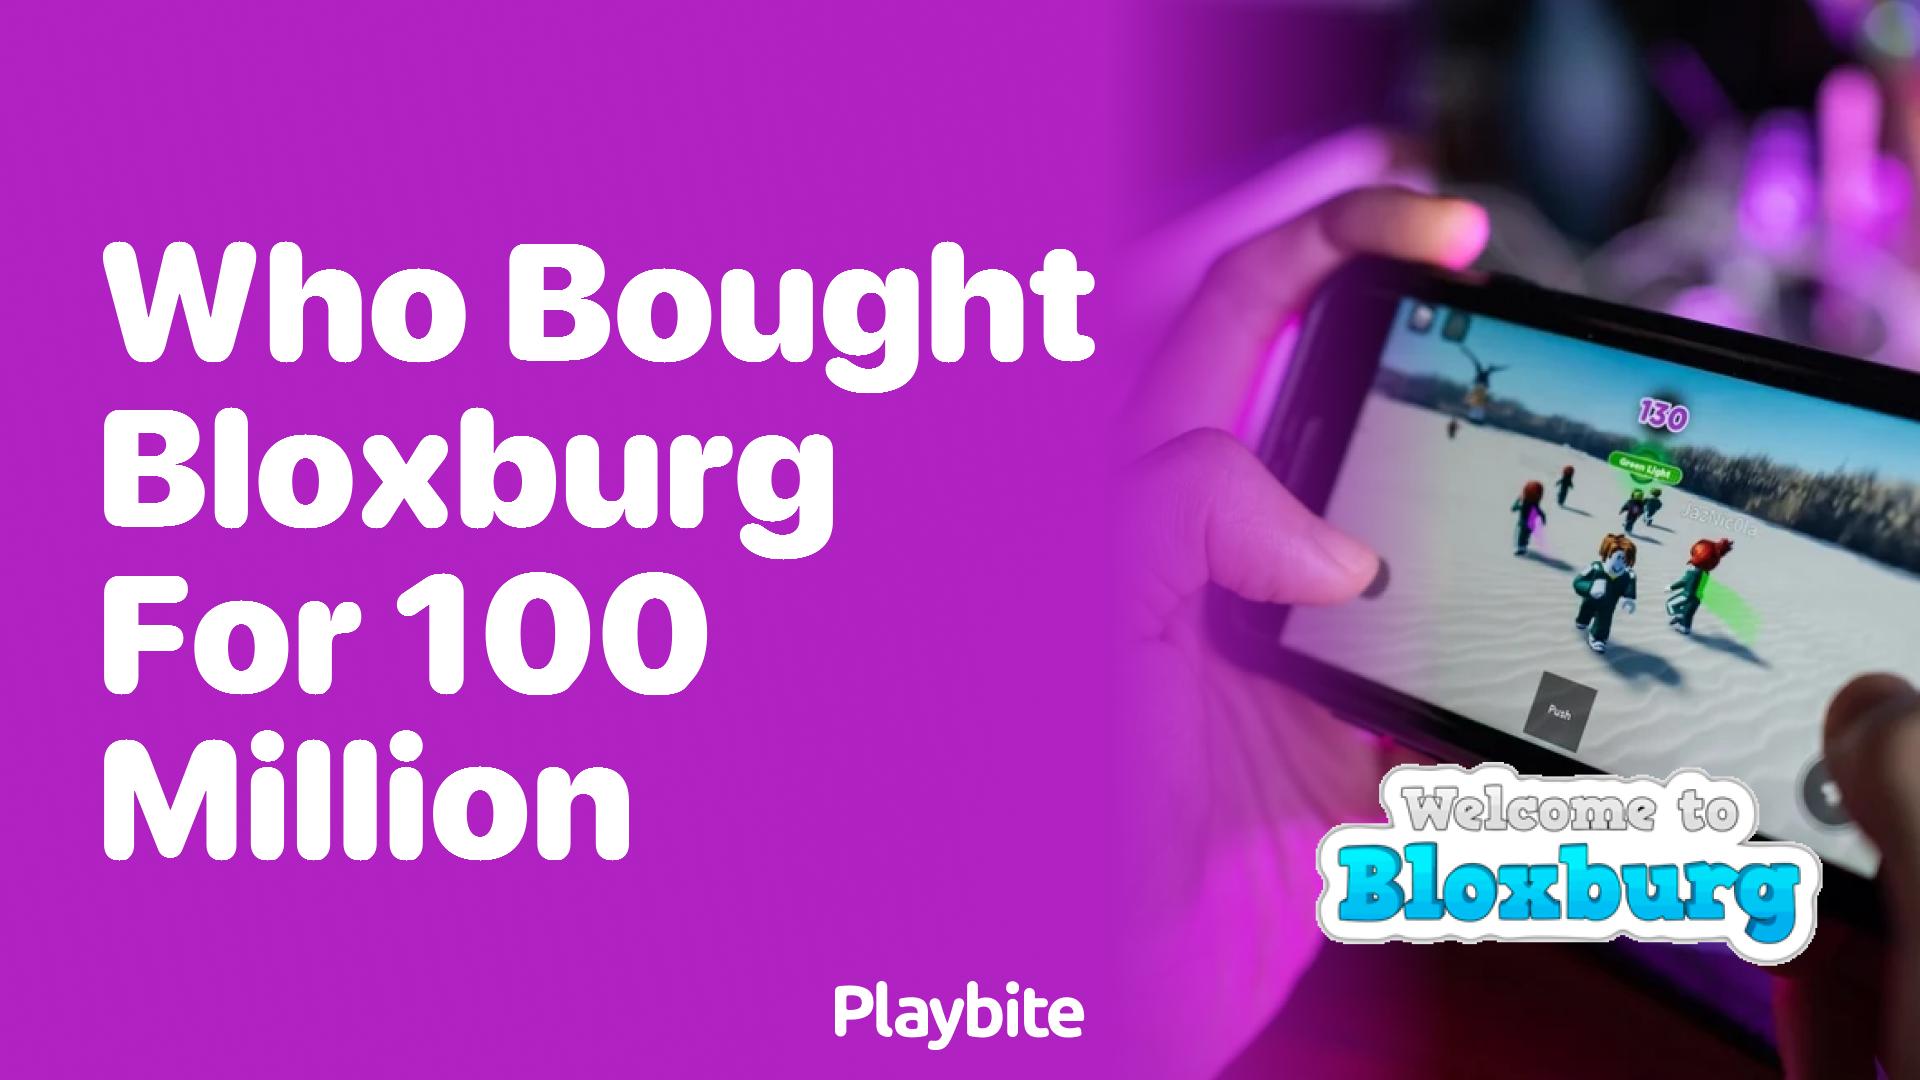 Who bought Bloxburg for $100 million?